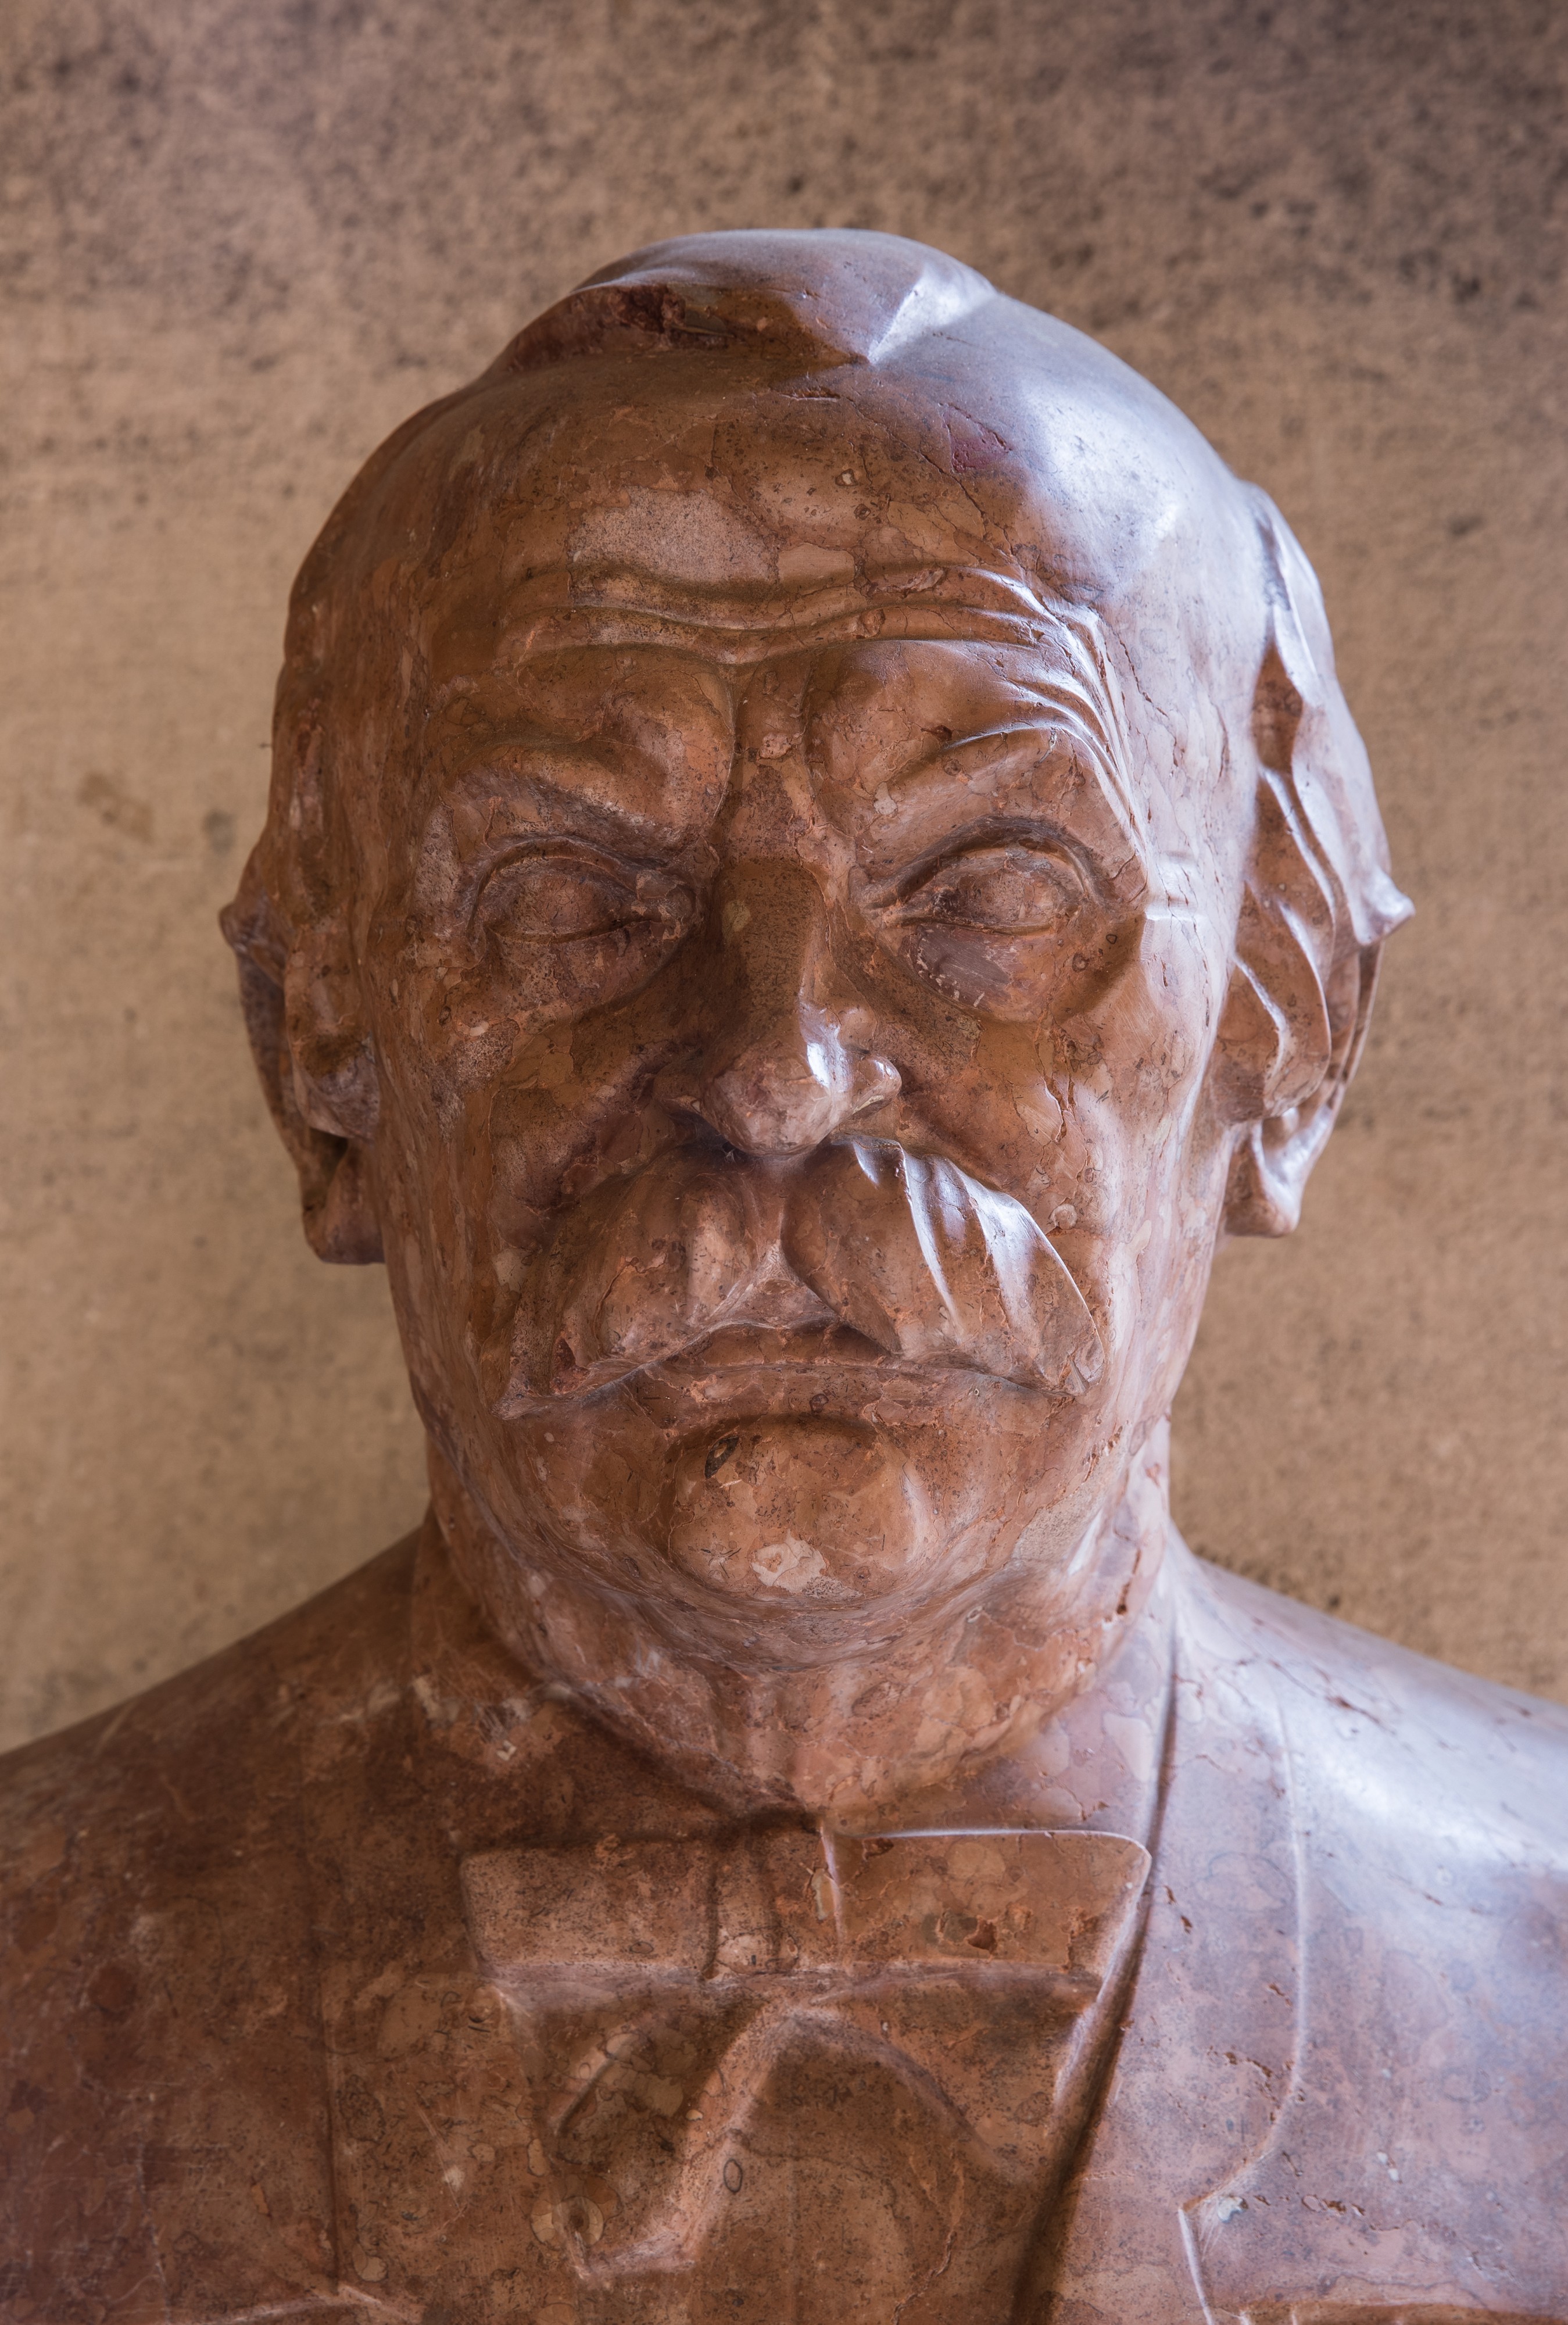 Julius Tandler (1869-1936), Nr 76 bust (marble) in the Arkadenhof of the University of Vienna-2313-HDR